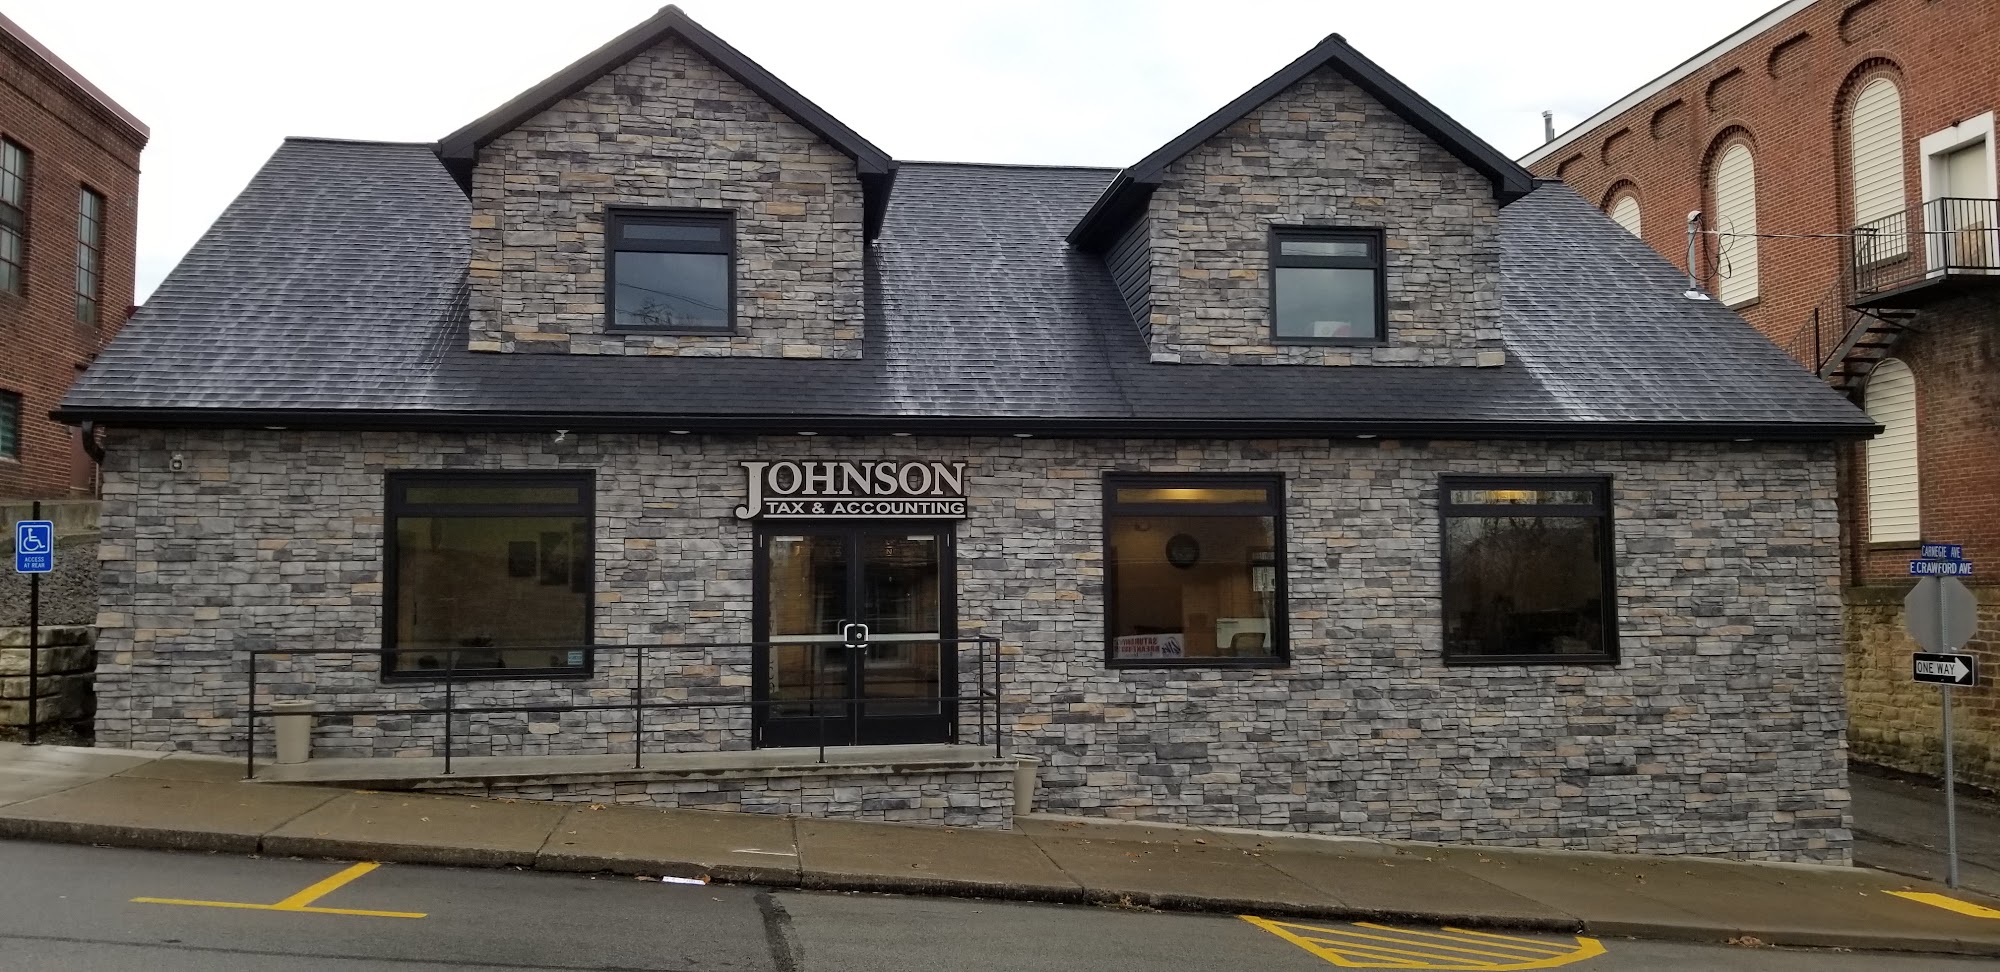 Johnson Tax & Accounting 131 E Crawford Ave, Connellsville Pennsylvania 15425